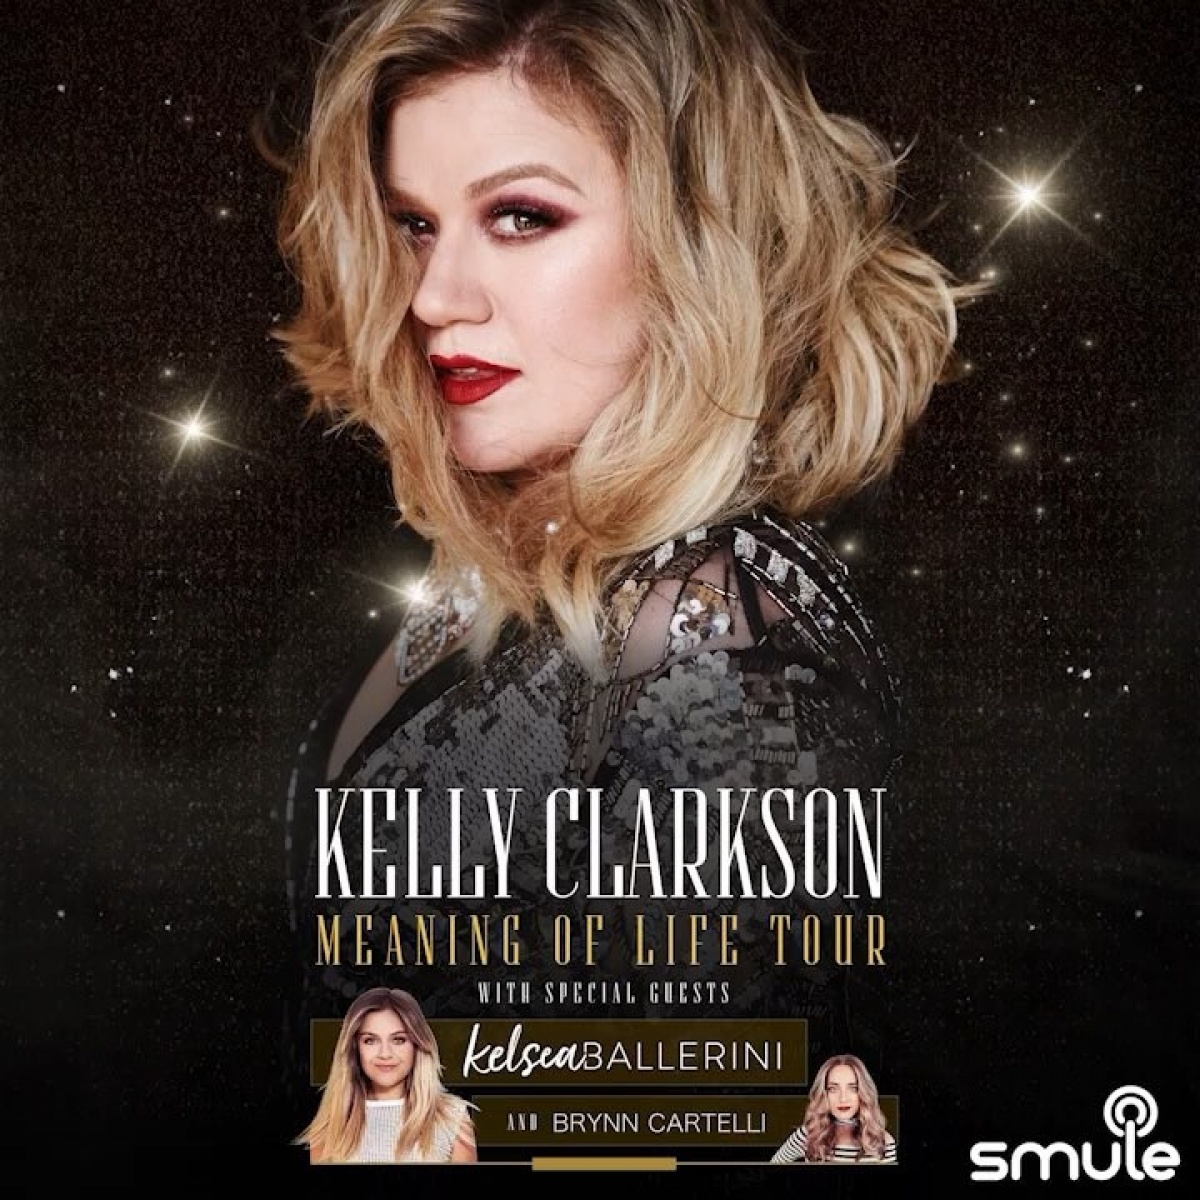 Kelly Clarkson announces 2019 tour with Kelsea Ballerini and 'The Voice' winner Brynn ...